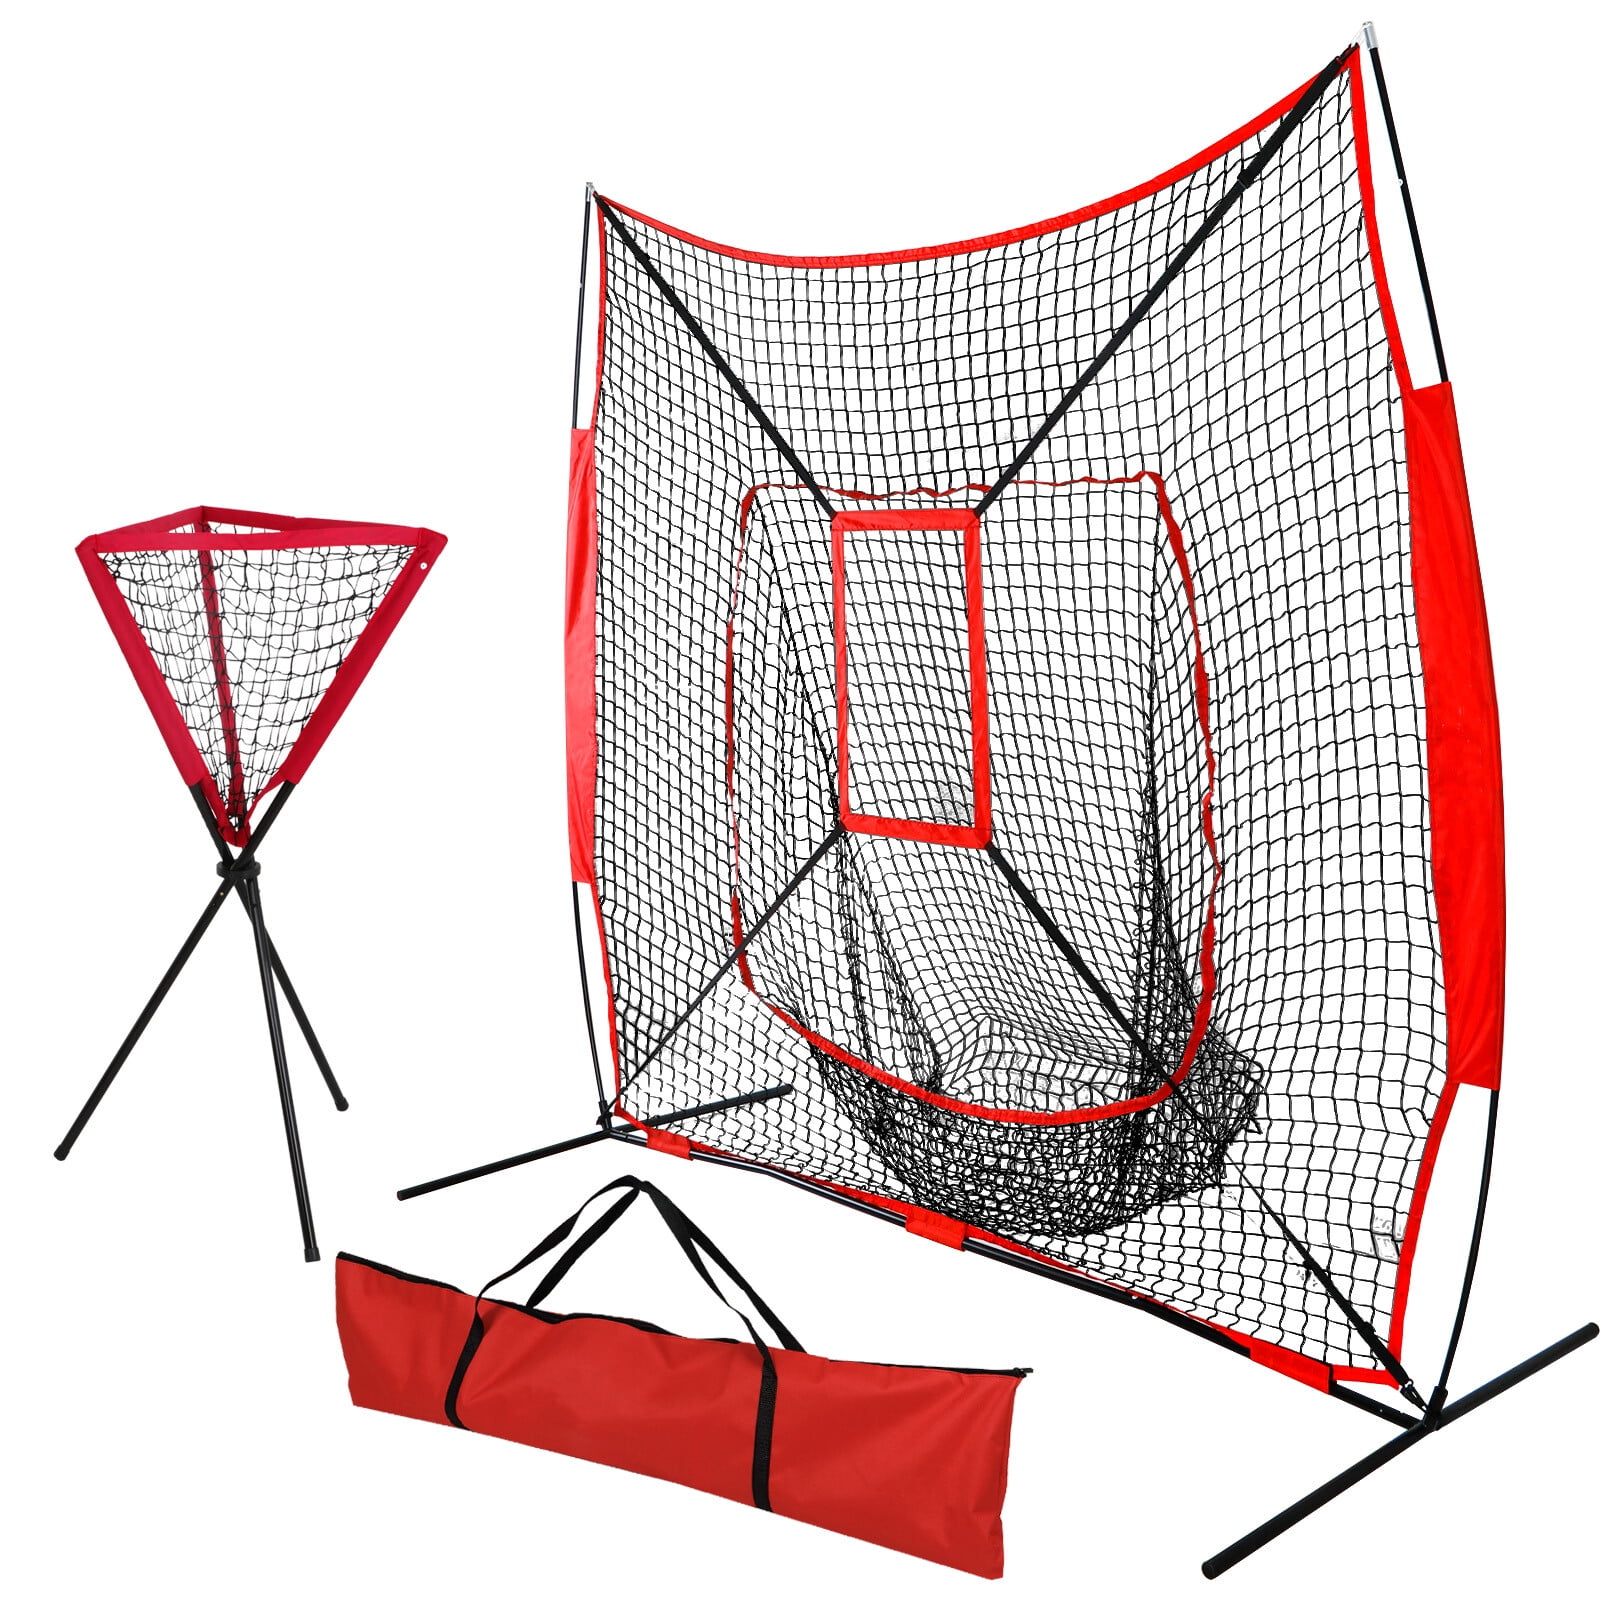 7'x7' Baseball Softball Hitting Pitching Batting Practice Net With Stand/Bag Red 